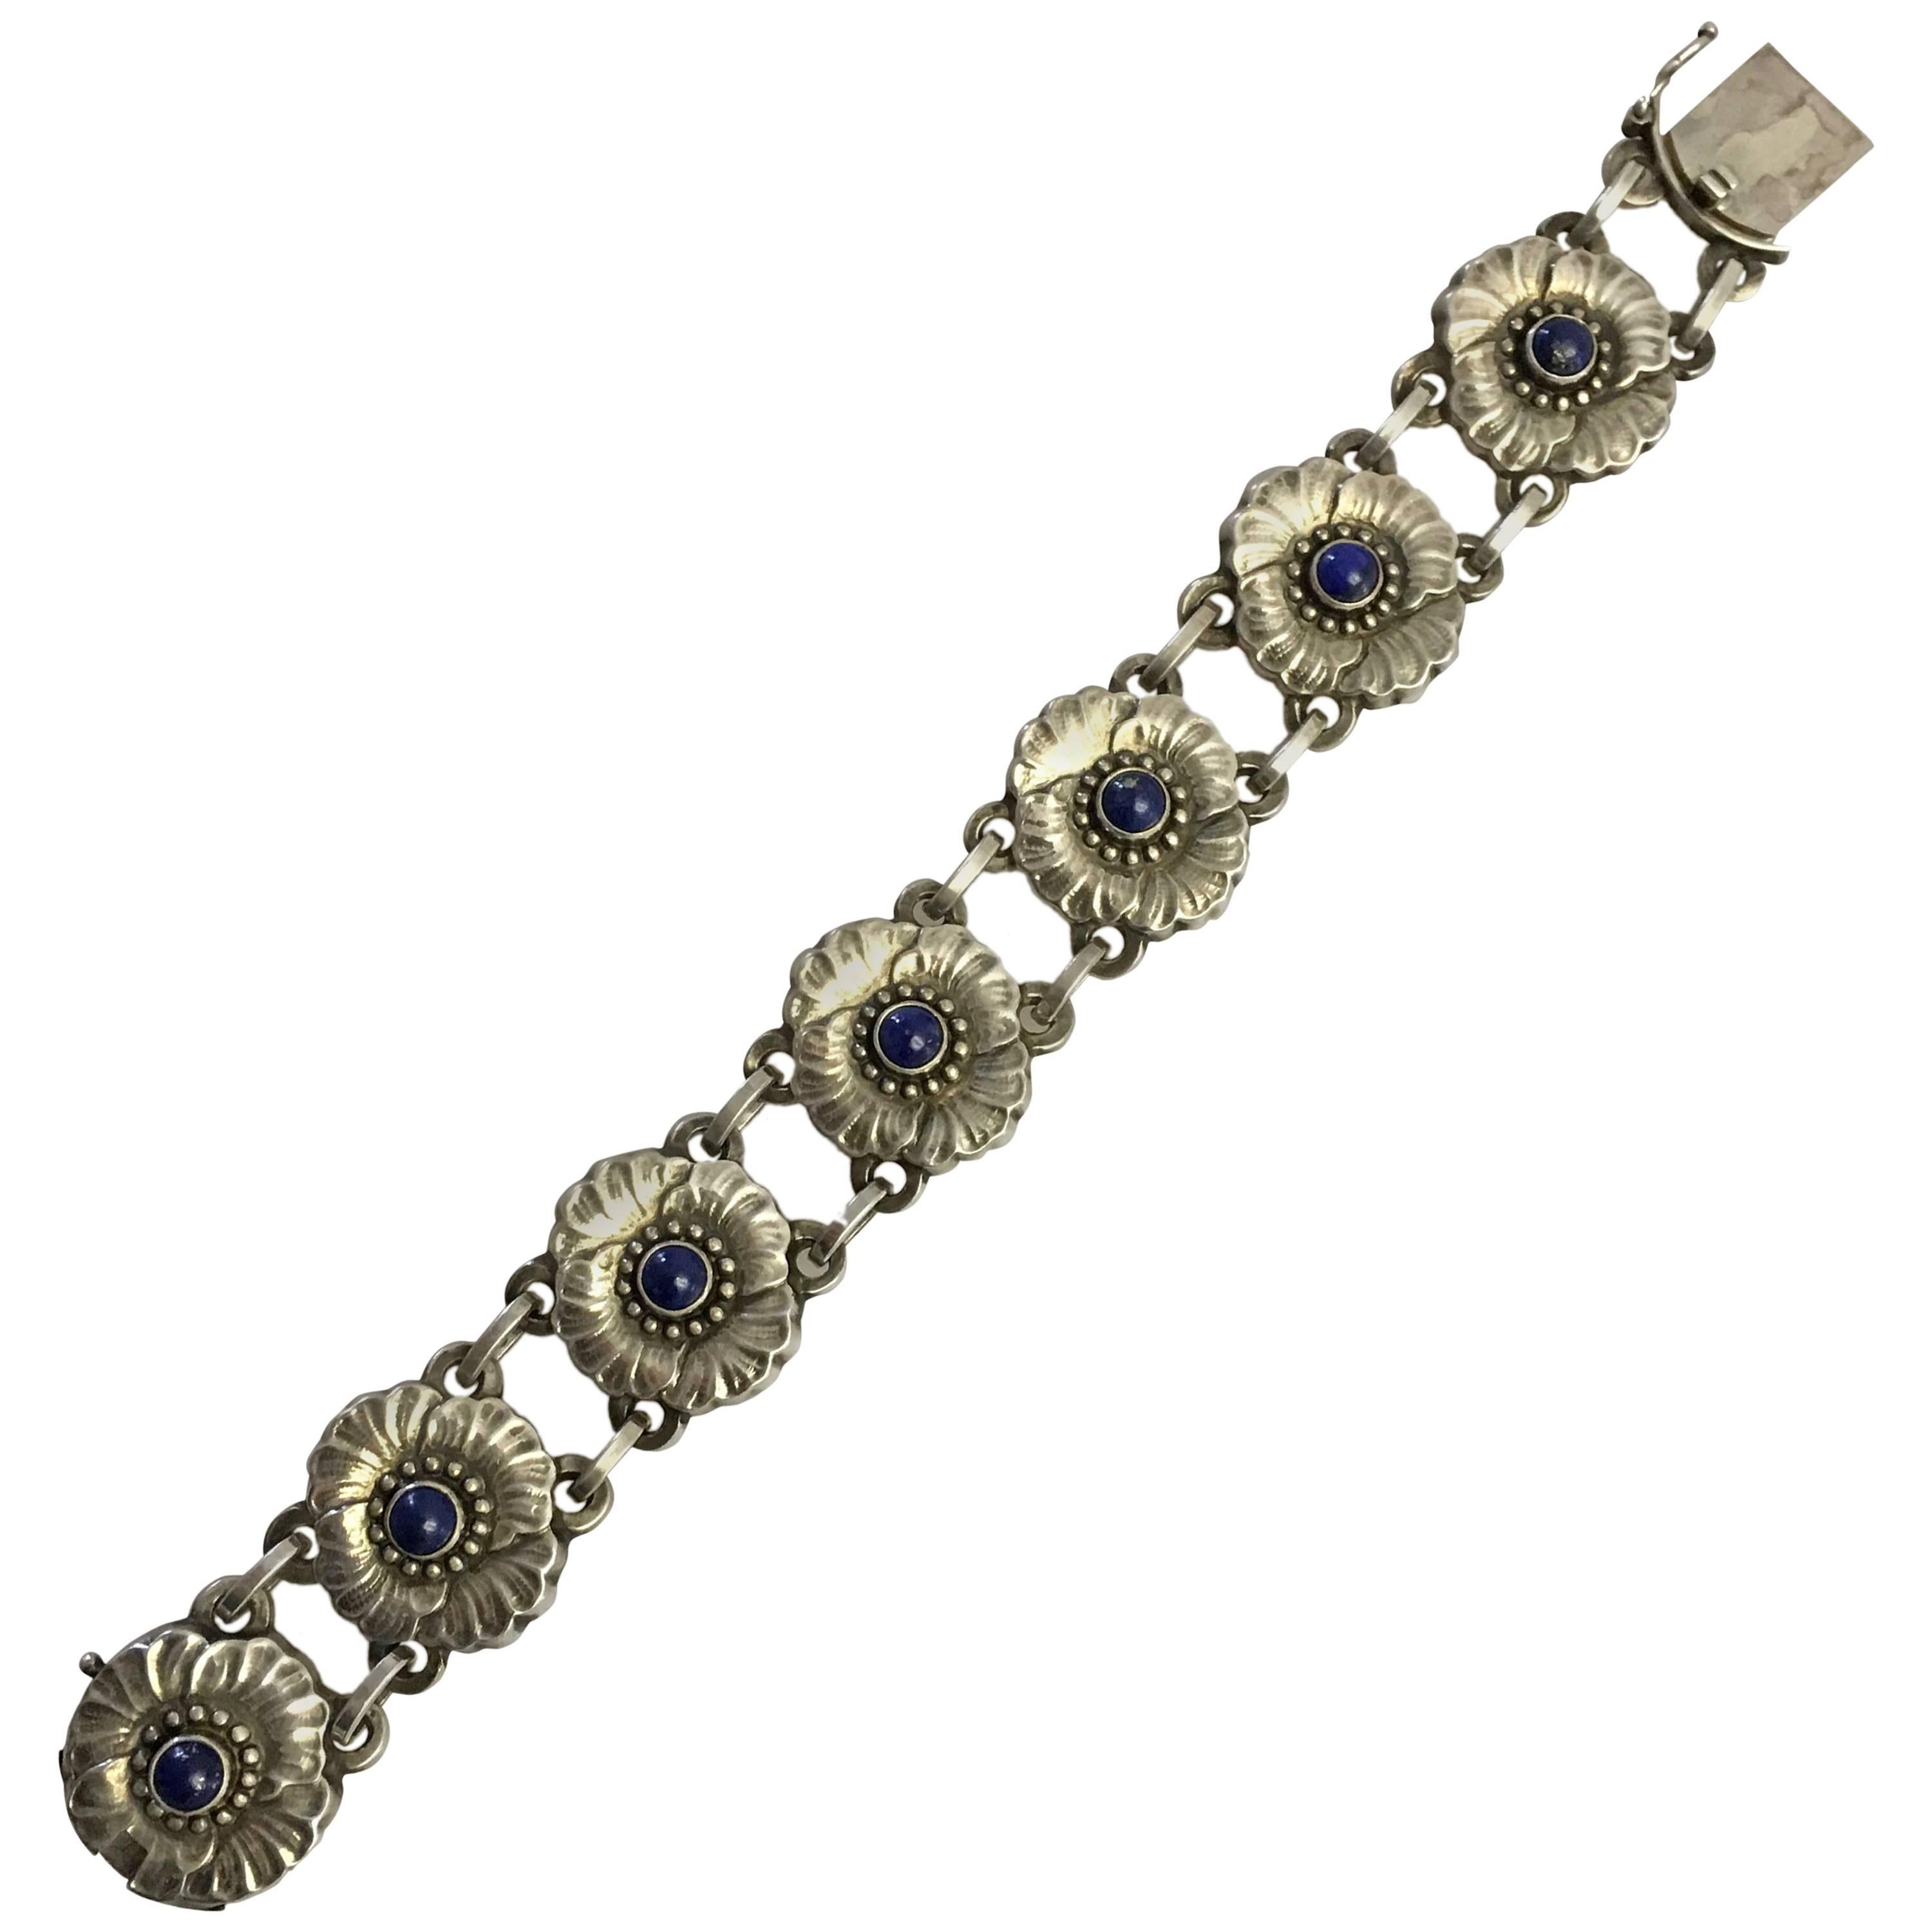 Georg Jensen Sterling Silver Bracelet #36 with Lapis Lazuli